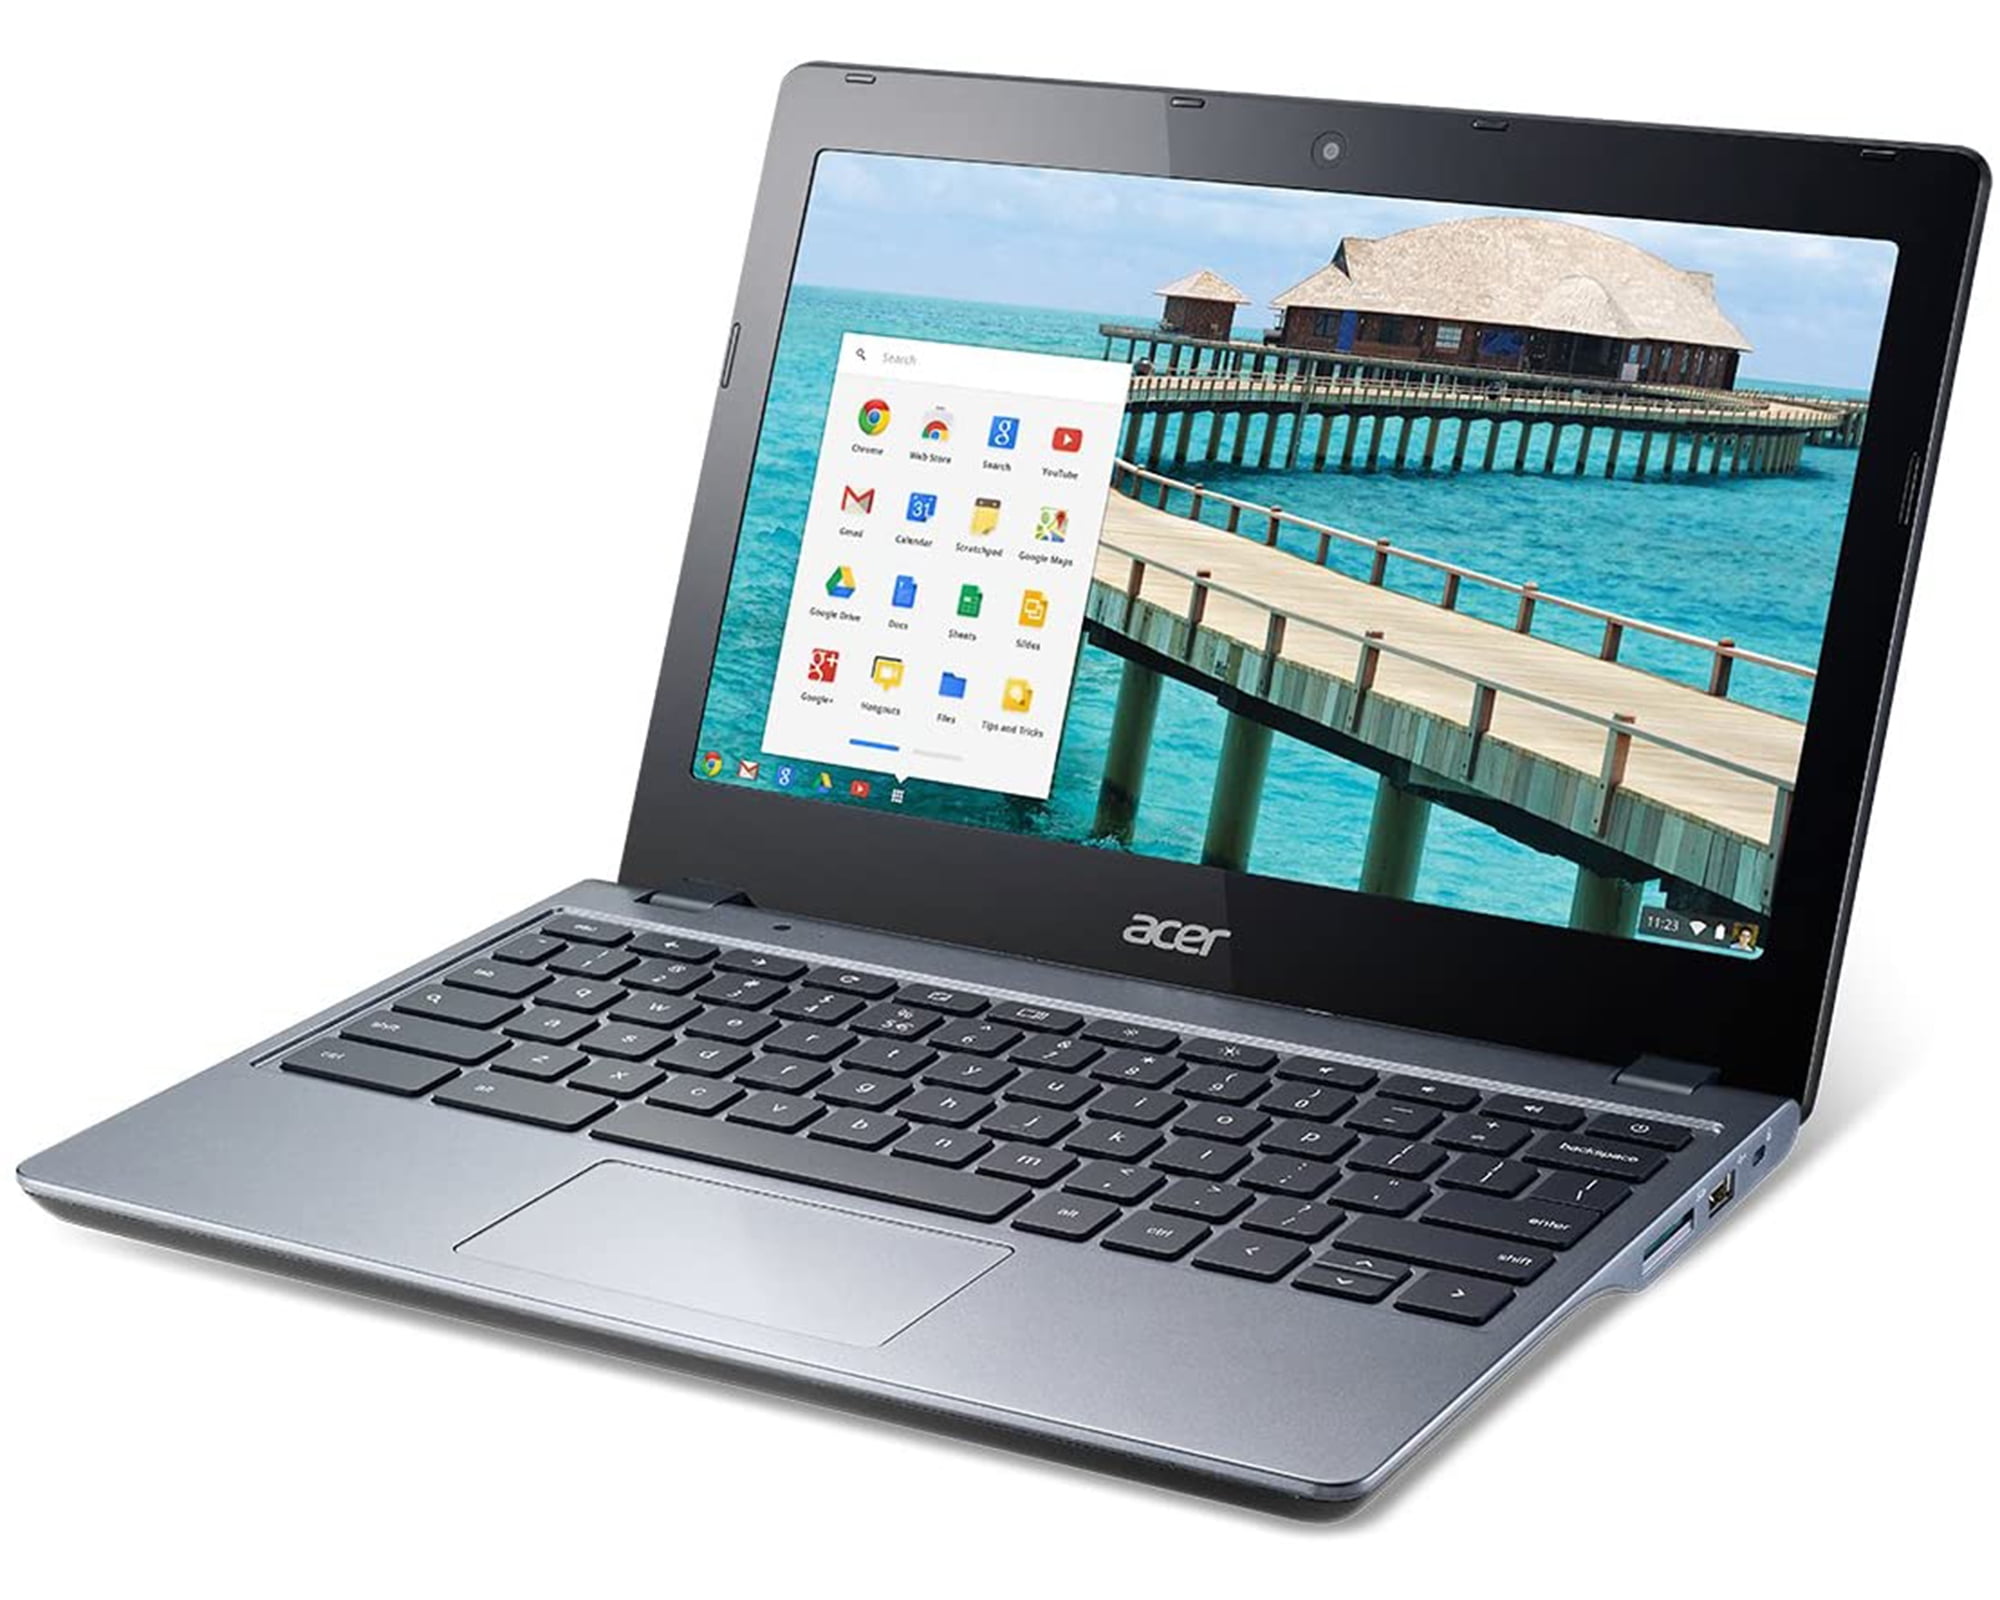 Acer Chromebook C720-2103, 1.40 GHz Intel Celeron, 2GB DDR3 RAM, 16GB SSD Hard Drive, Chrome, 11" Screen (Used Grade B)